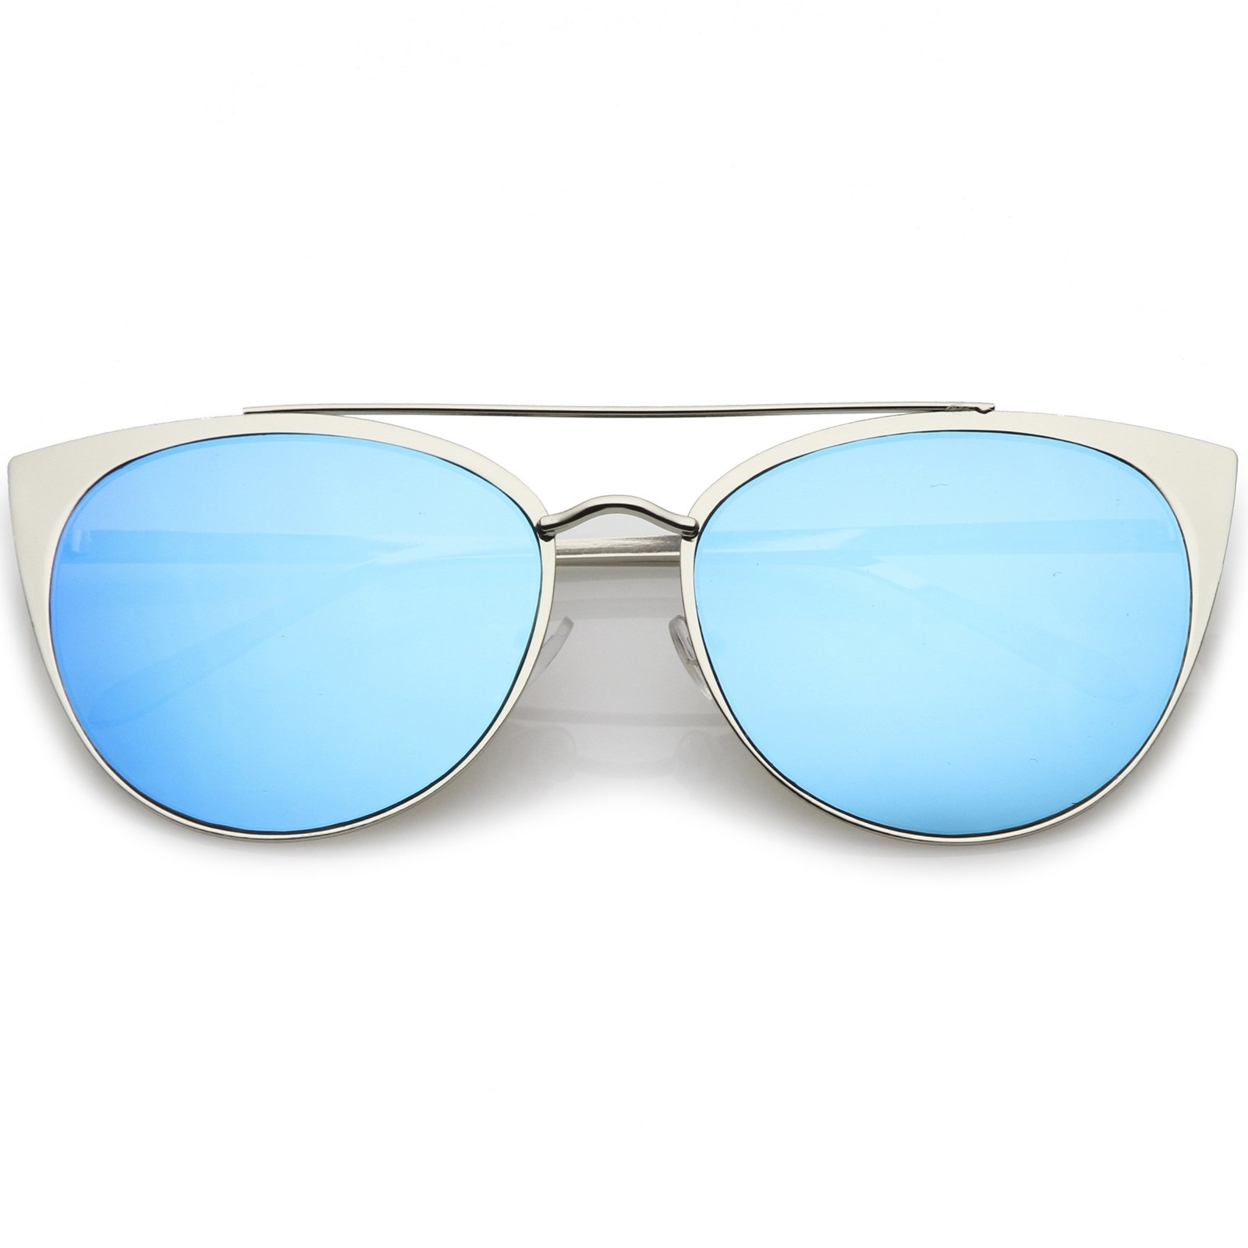 Women's Oversize Metal Crossbar Mirrored Flat Lens Cat Eye Sunglasses 61mm - Shiny Silver / Silver Mirror